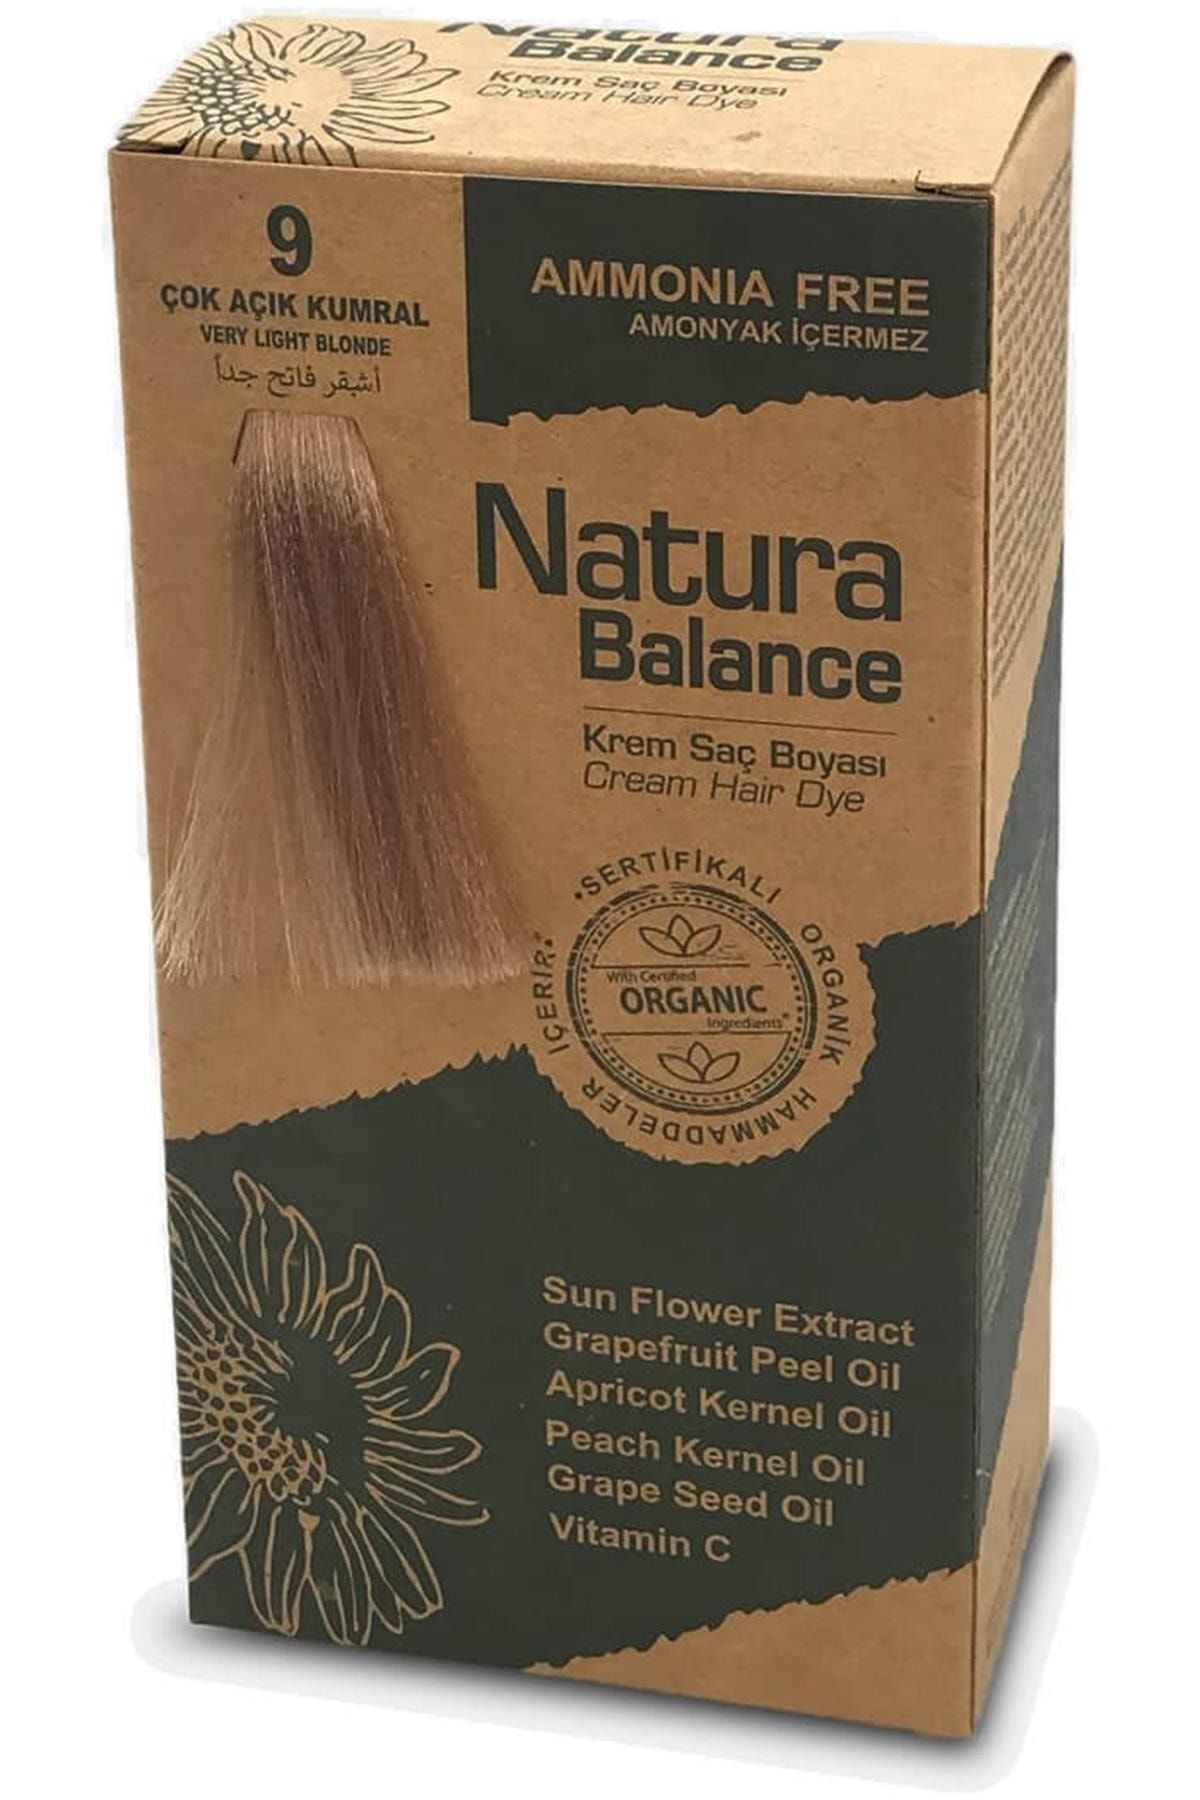 NATURABALANCE Natura Balance 9 Çok Açık Kumral Organik Krem Saç Boyası